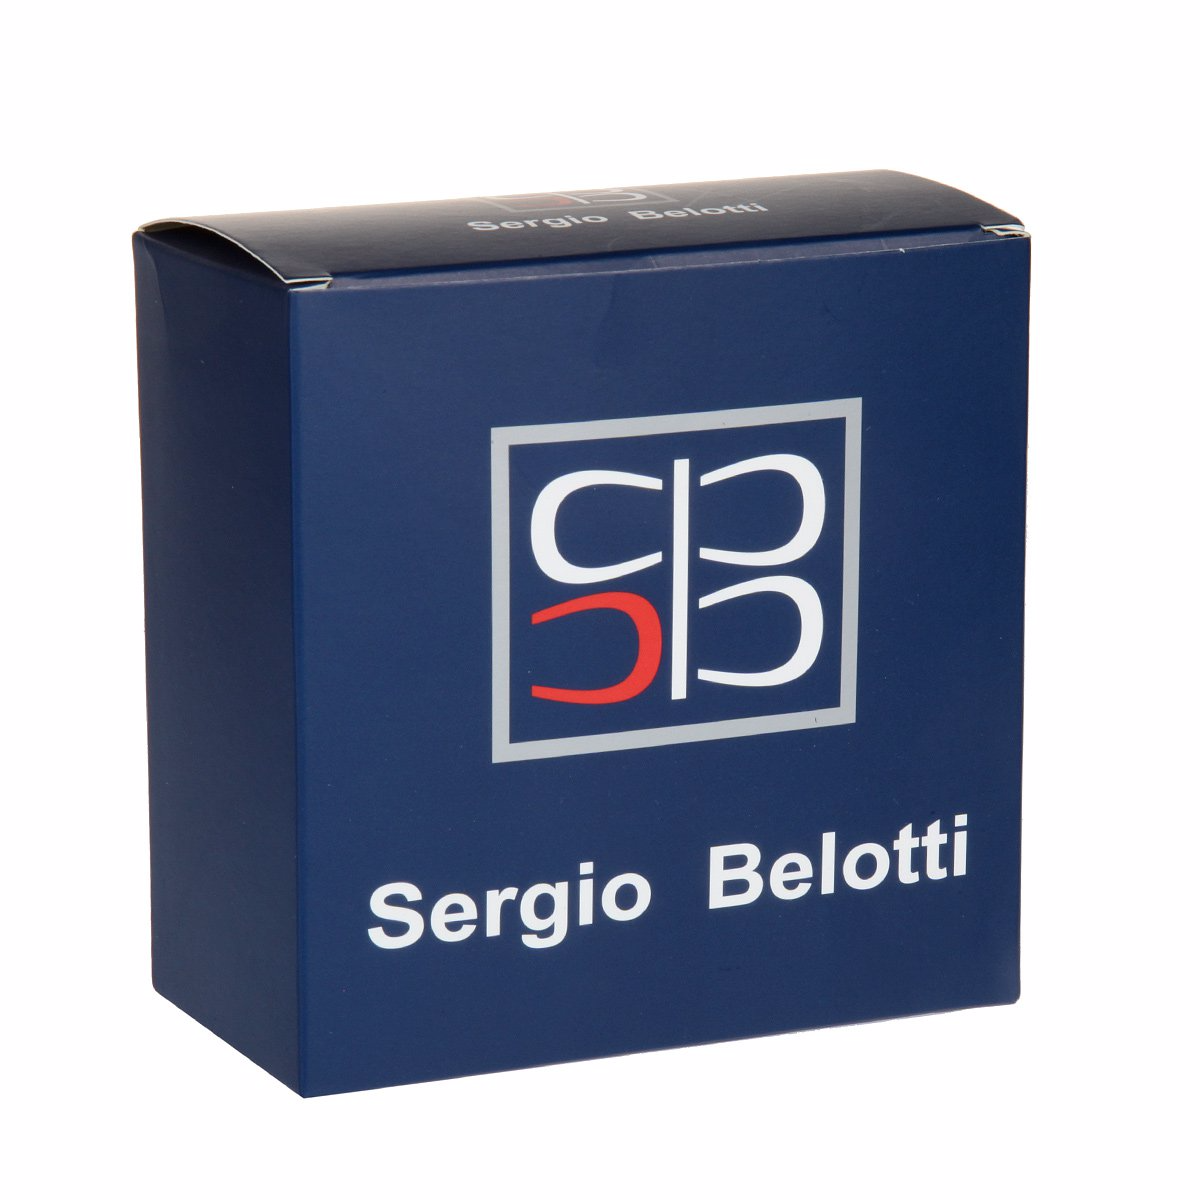 Ремень
Sergio Belotti
1017/40 Navy Ремни и пояса